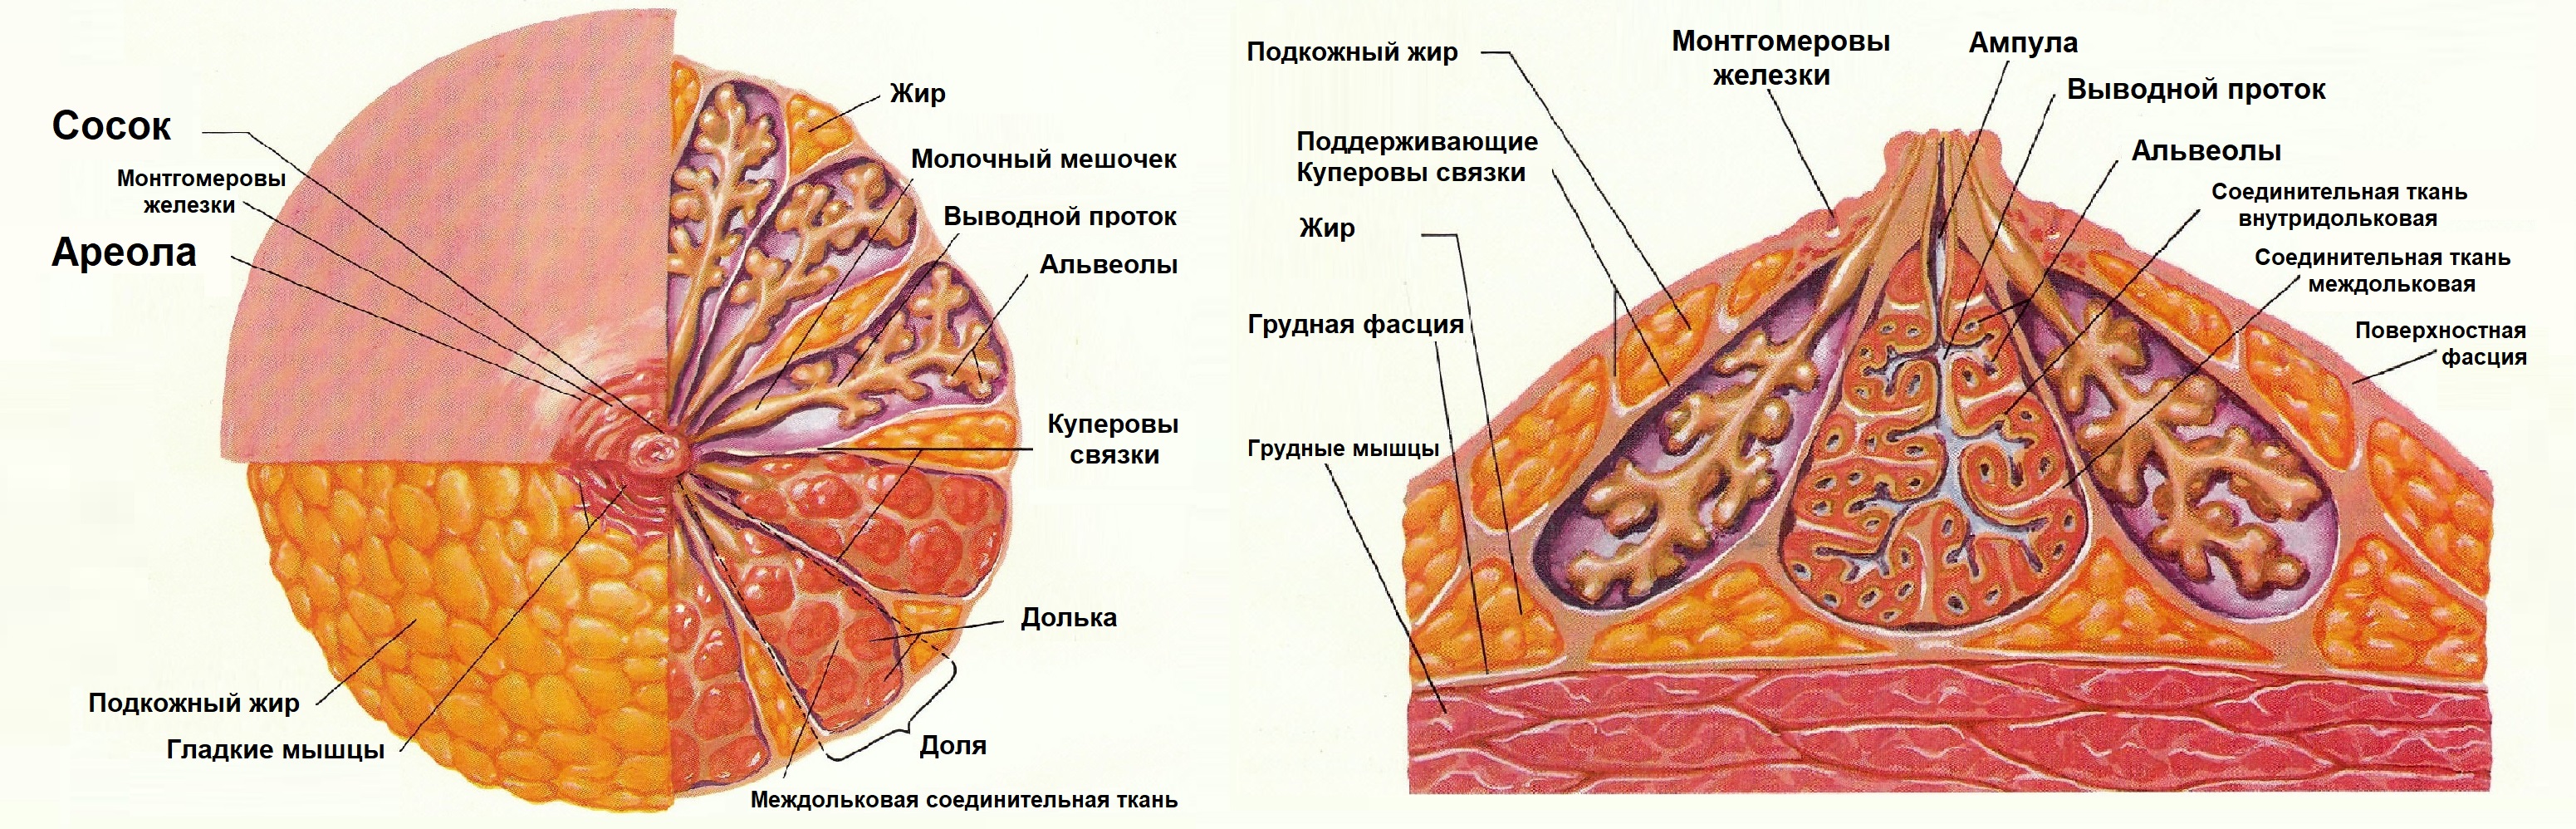 Классификация гинекомастии